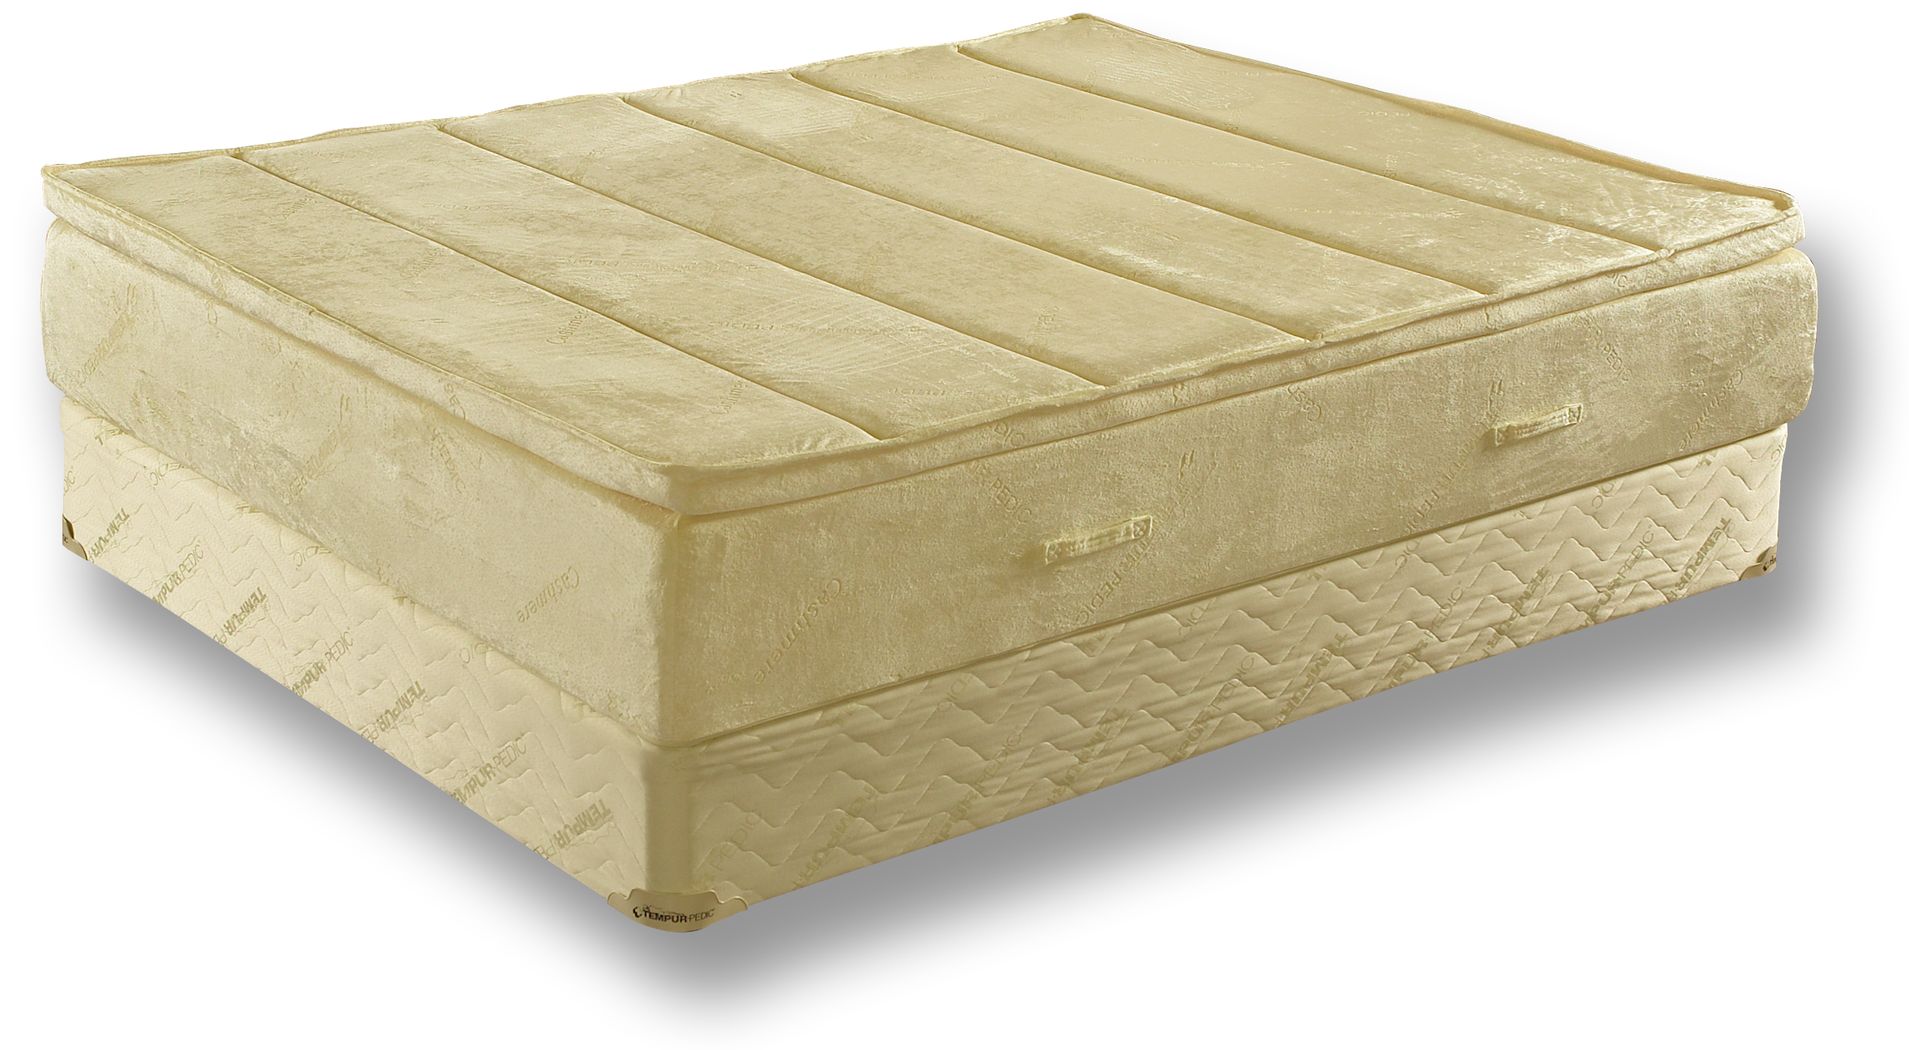 tempur celebrity mattress super king size